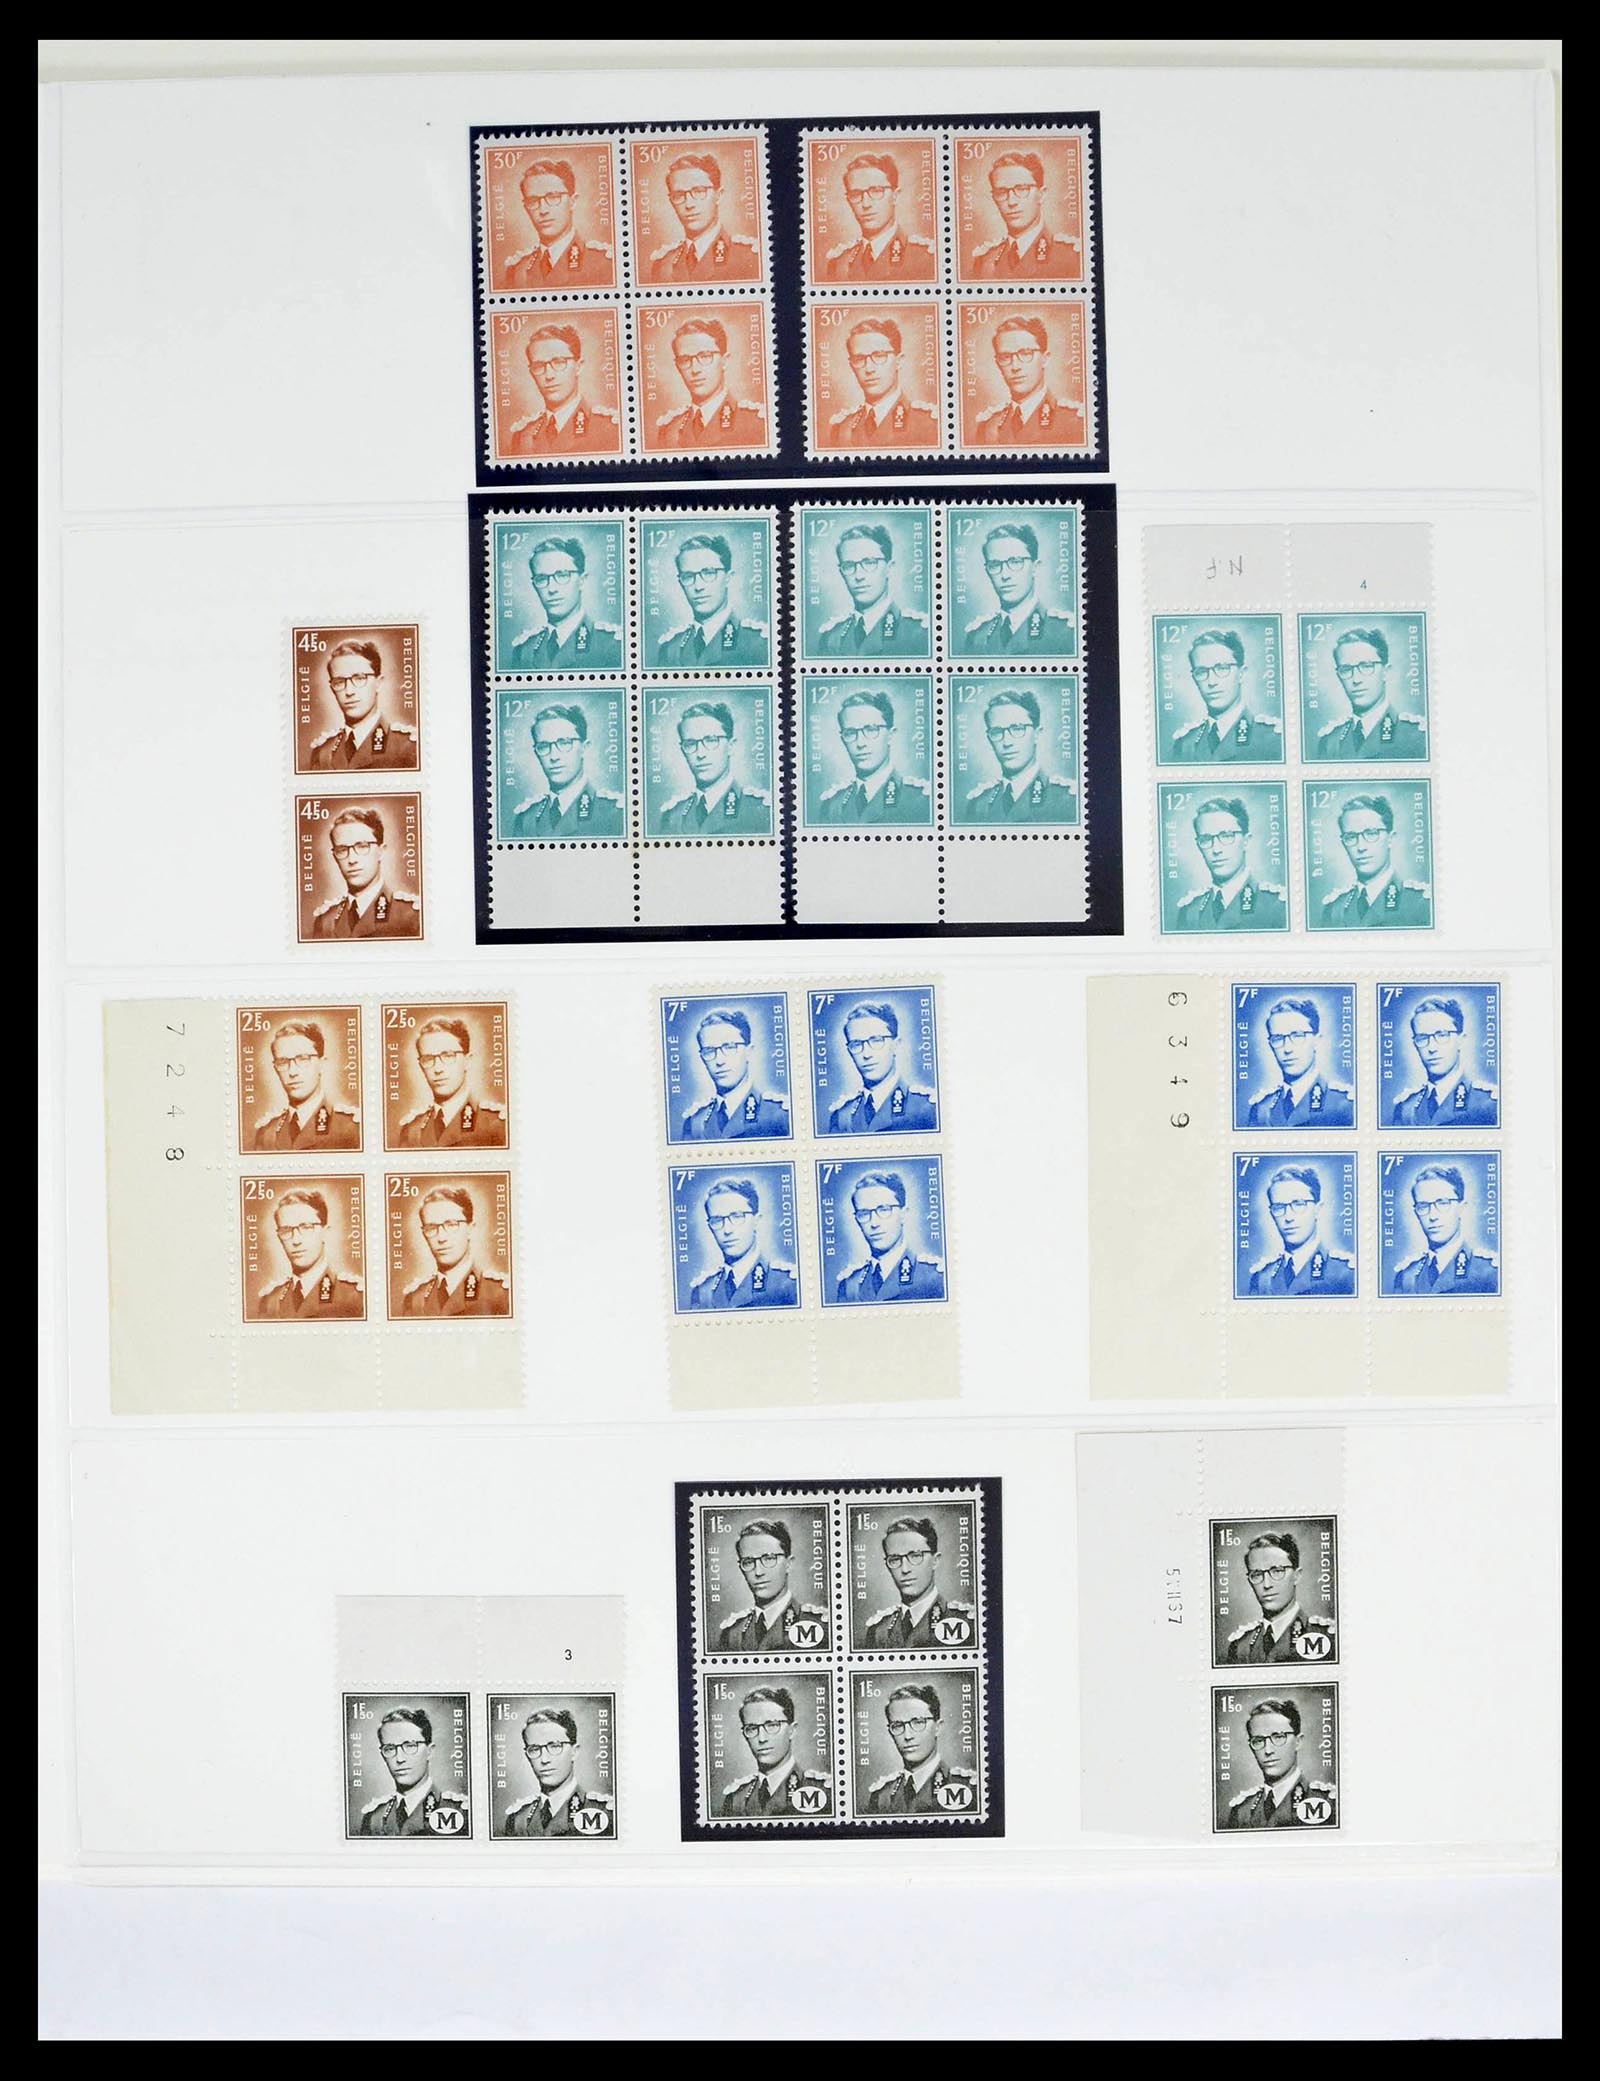 39229 0031 - Stamp collection 39229 Belgium Boudewijn with glasses 1952-1975.